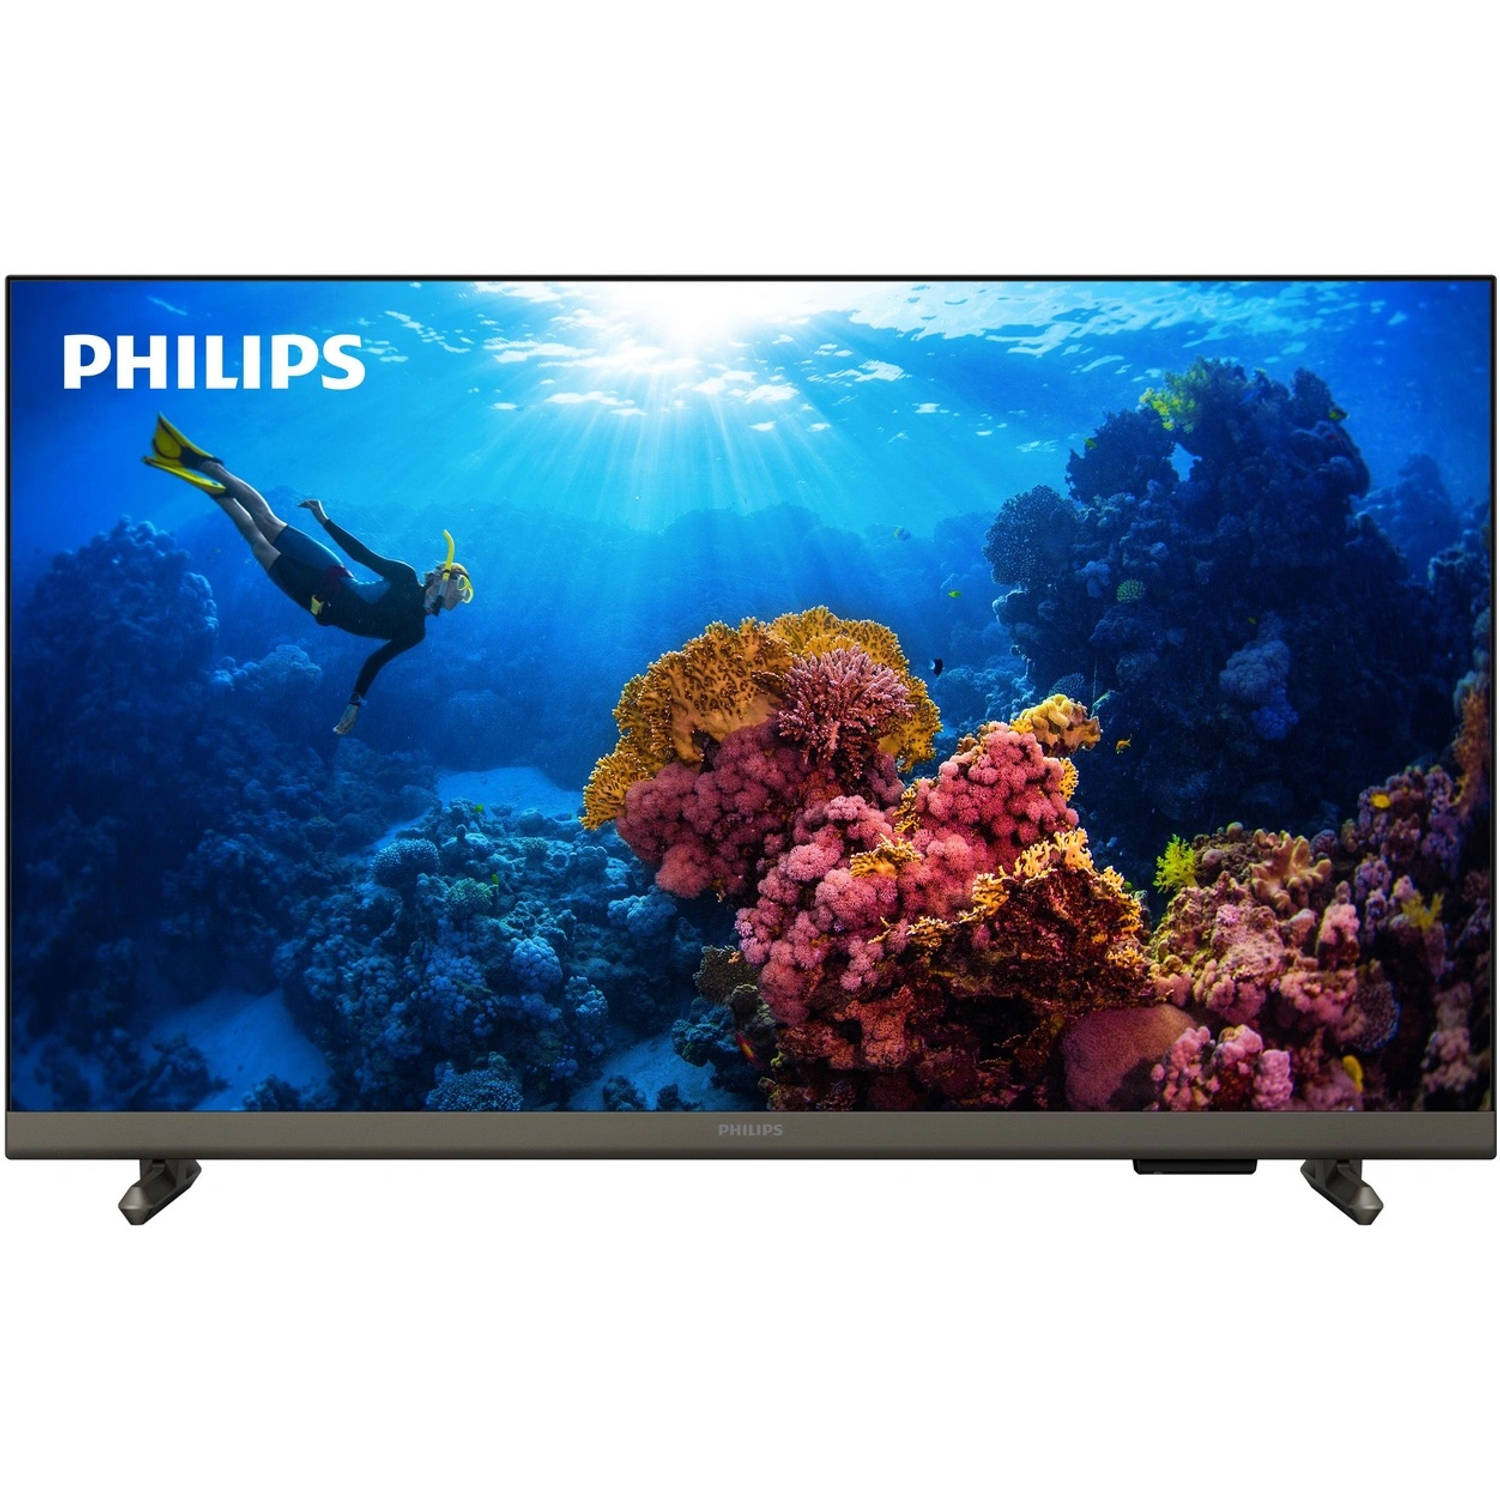 Philips Led-TV 32PHS6808-12, 80 cm-32 , HD ready, Smart TV